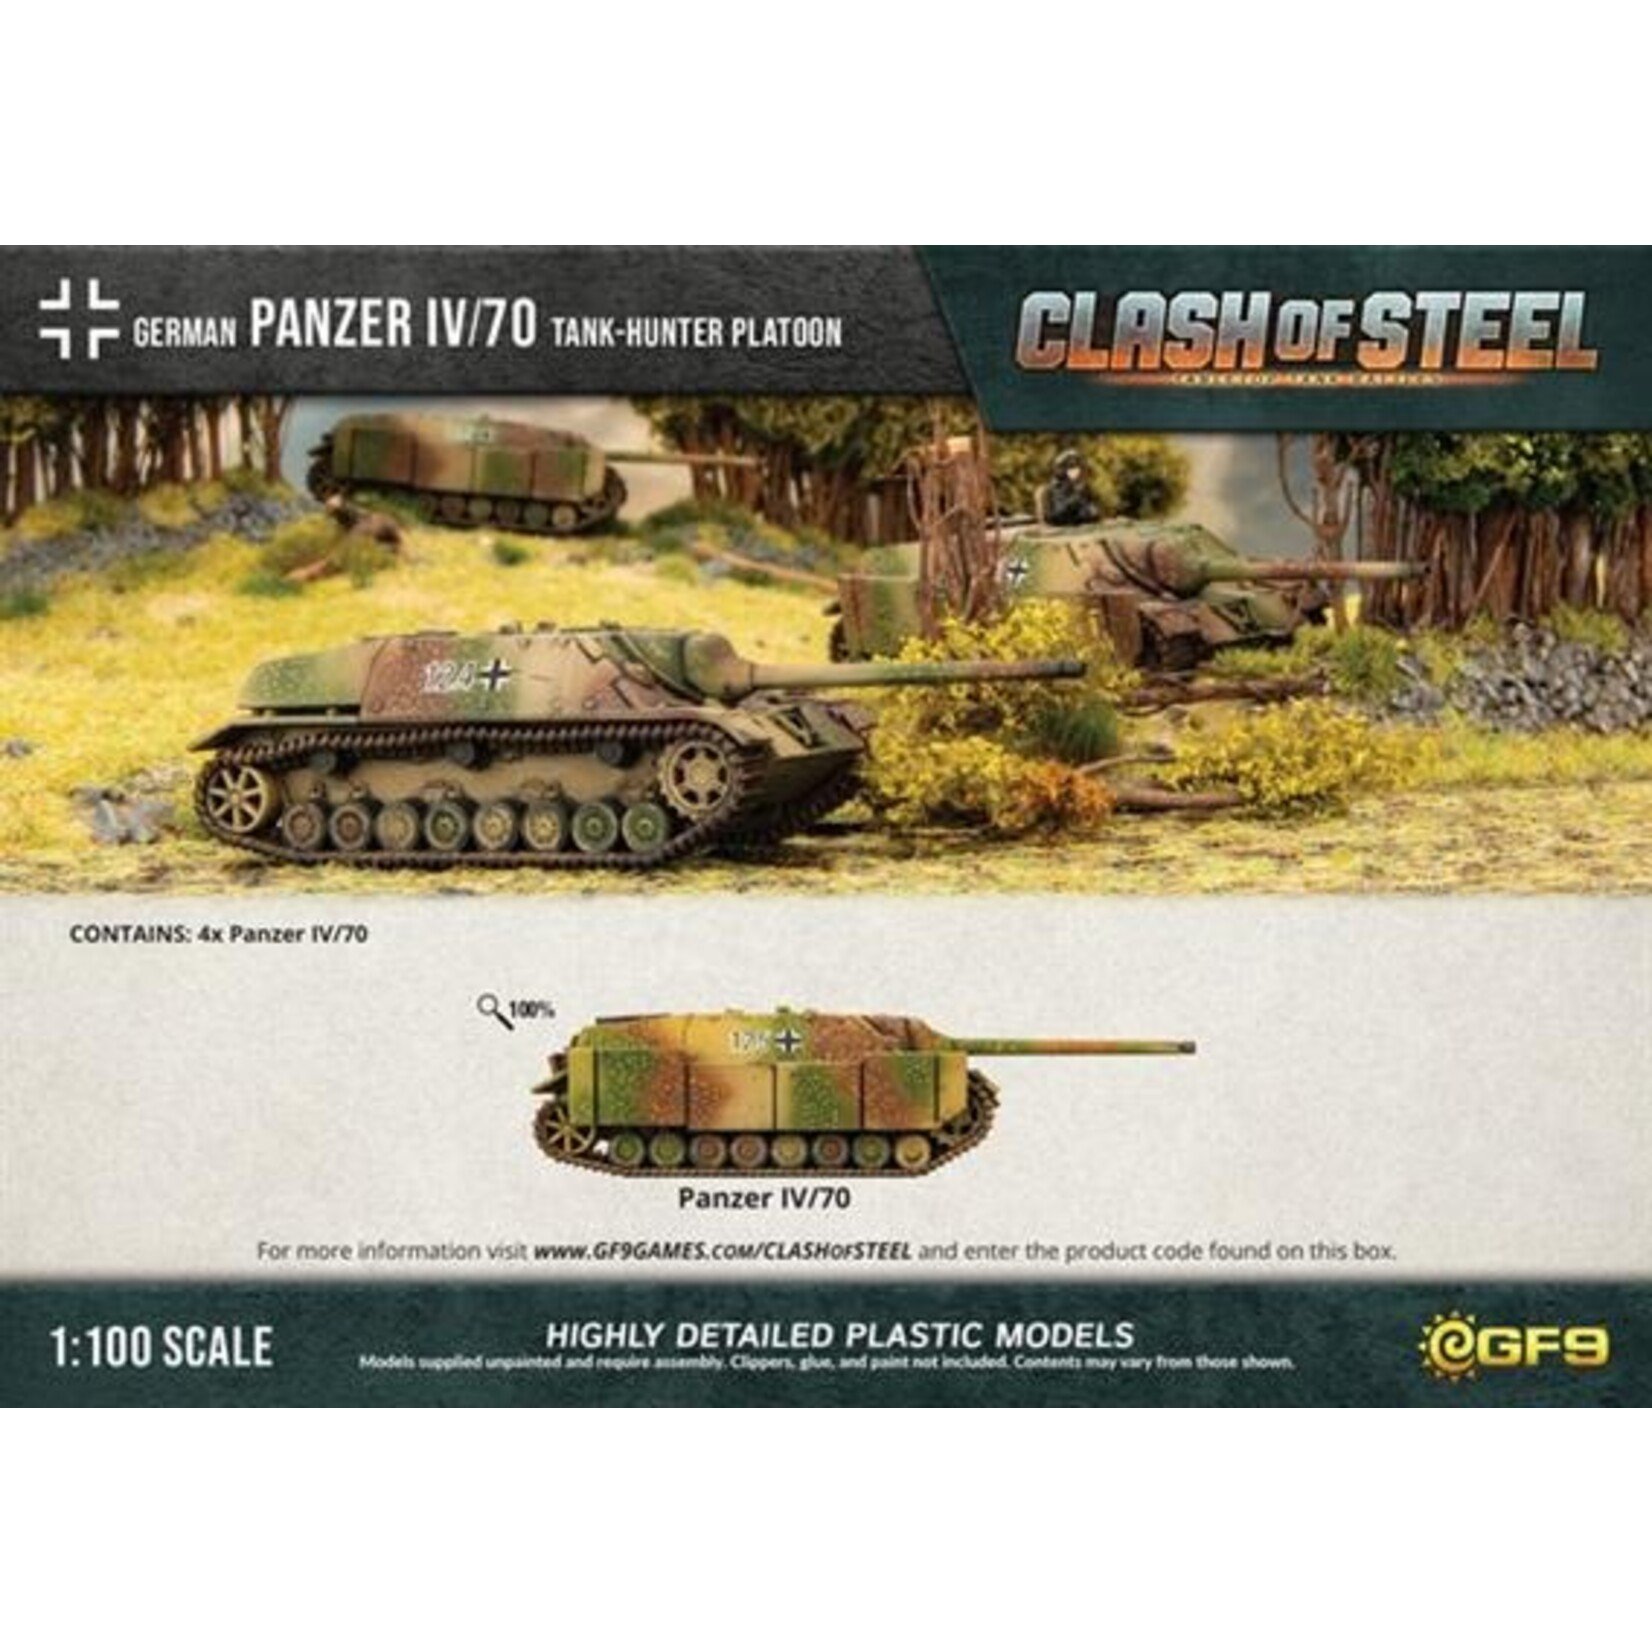 Clash Of Steel German Panzer IV/70 Tank-Hunter Platoon